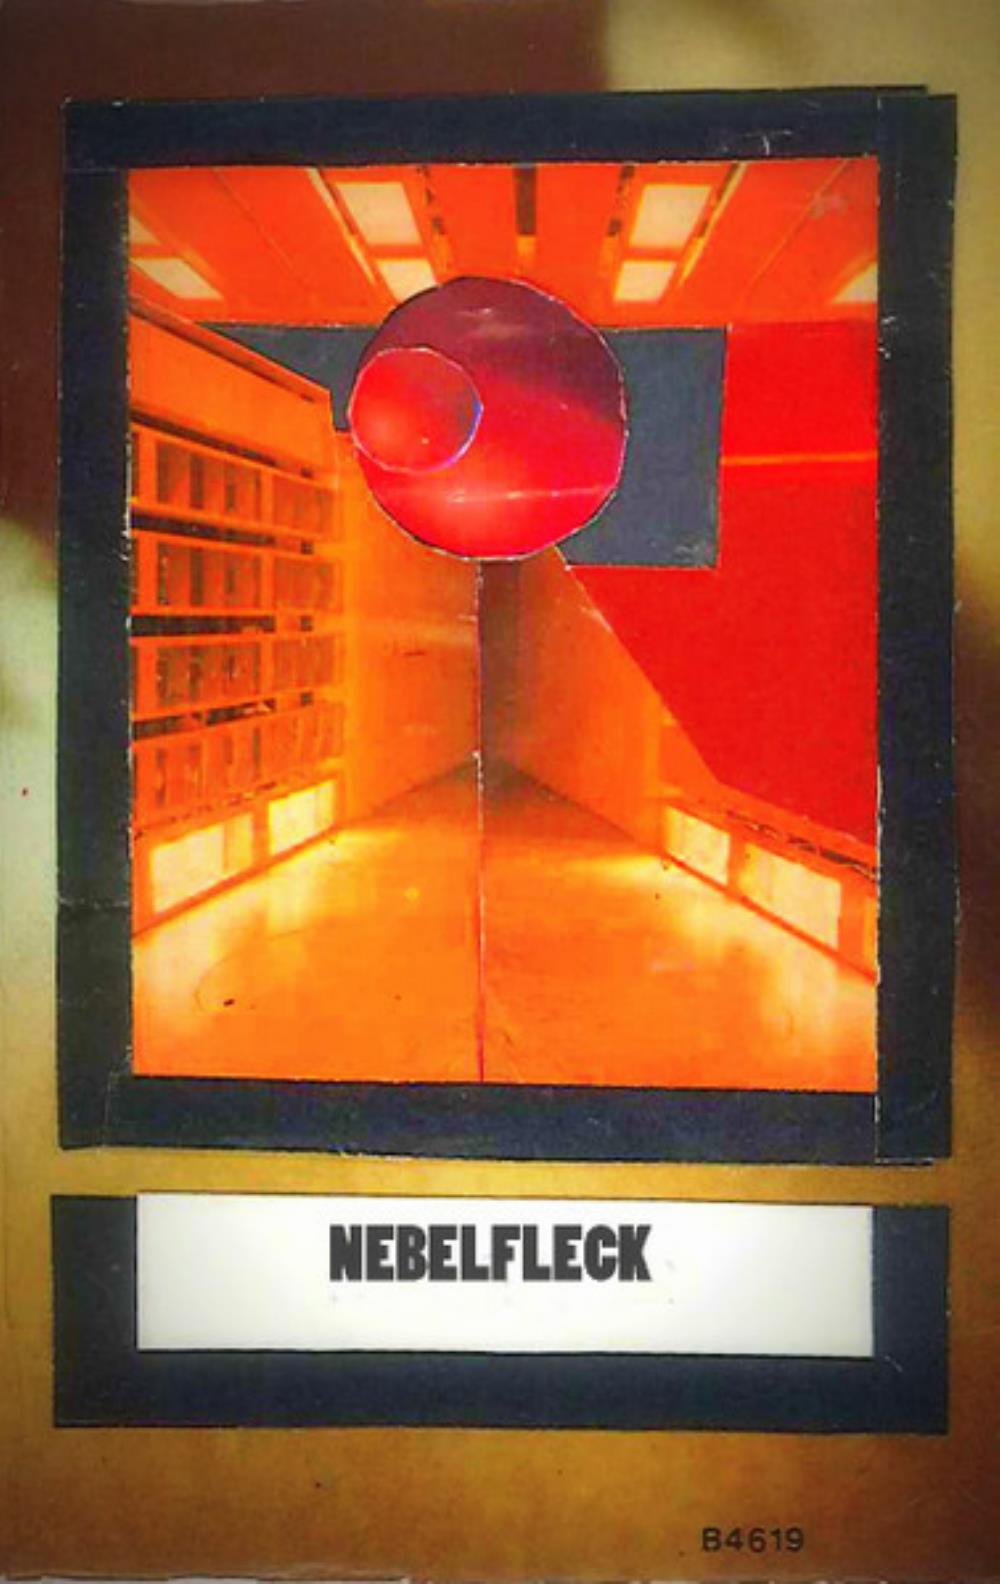 Miguel A. Ruiz Nebelfleck album cover